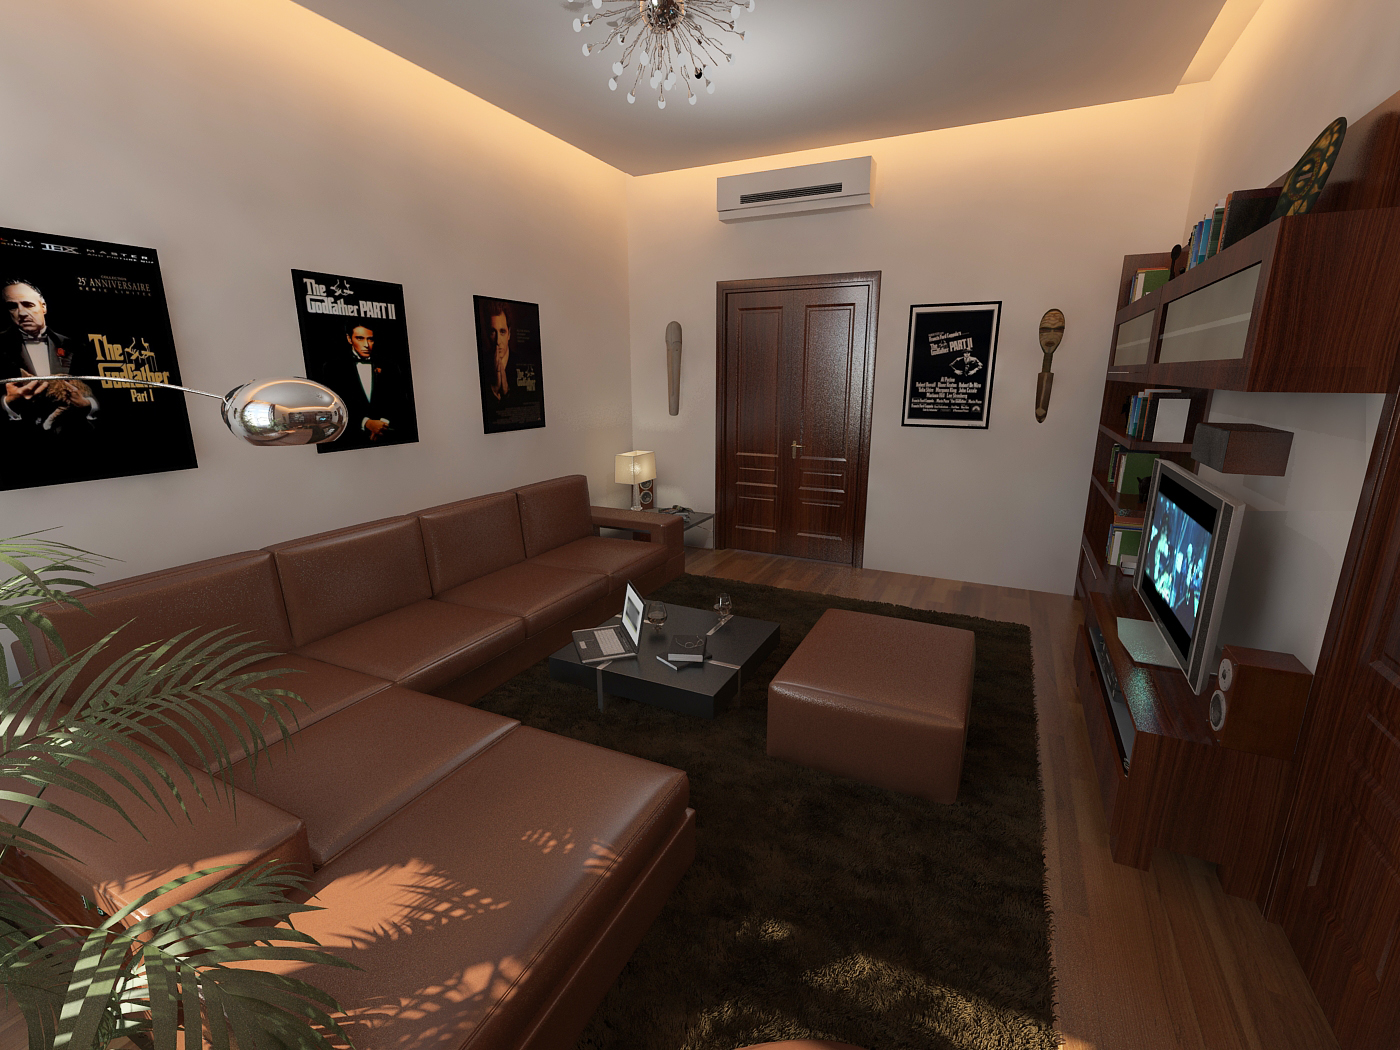 Nappali - terv / Living room - visualization